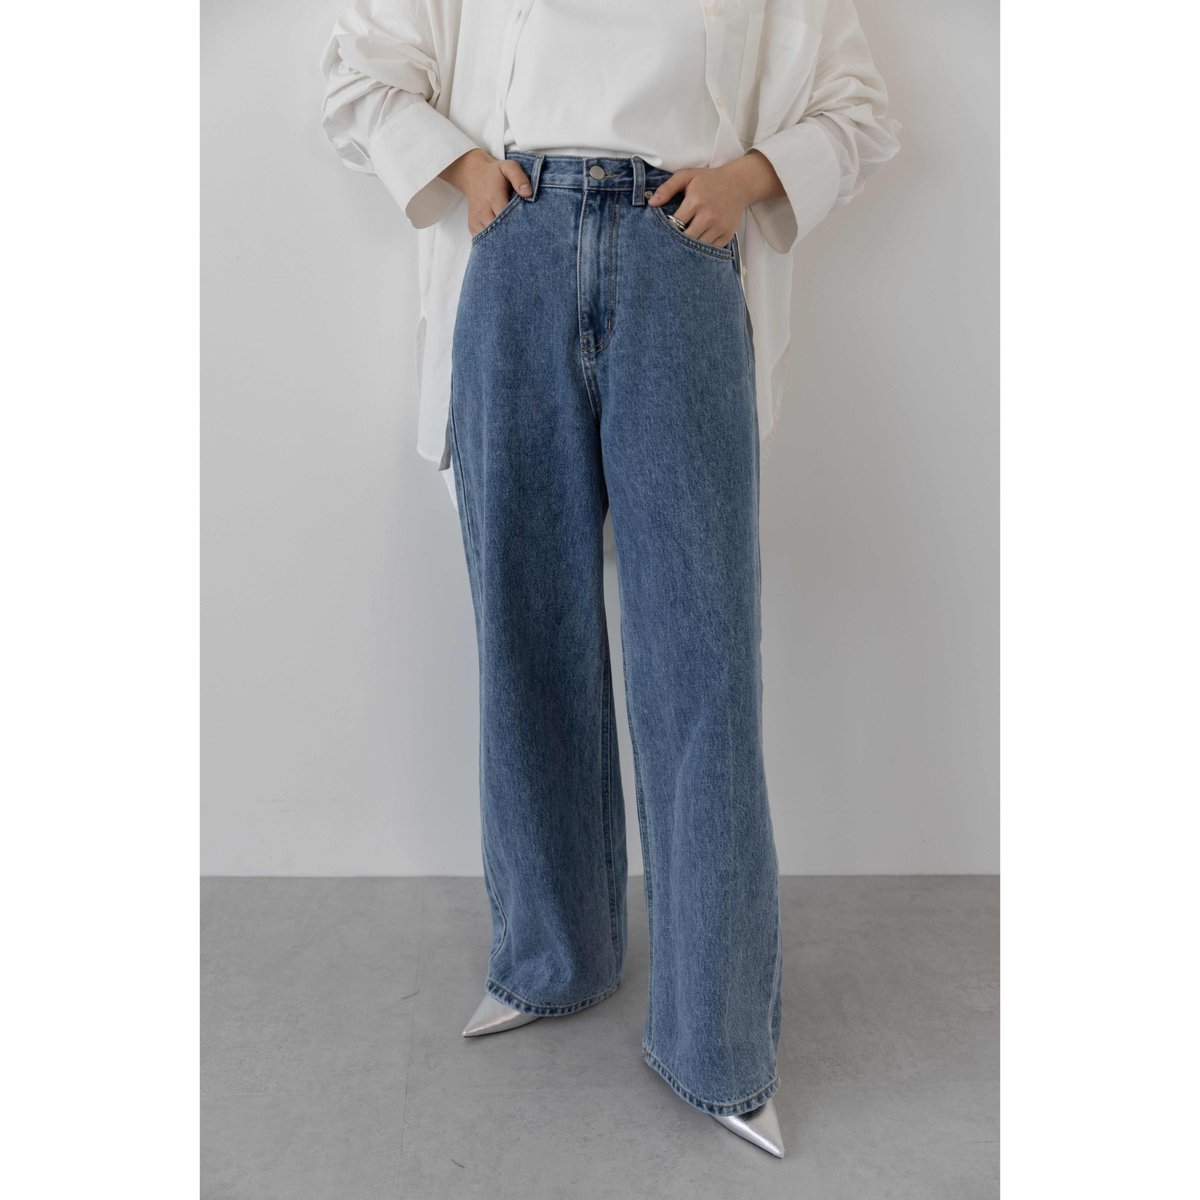 Soojun Mens Casual Loose Fit Elastic Waist Jeans Denim Pants, Deep